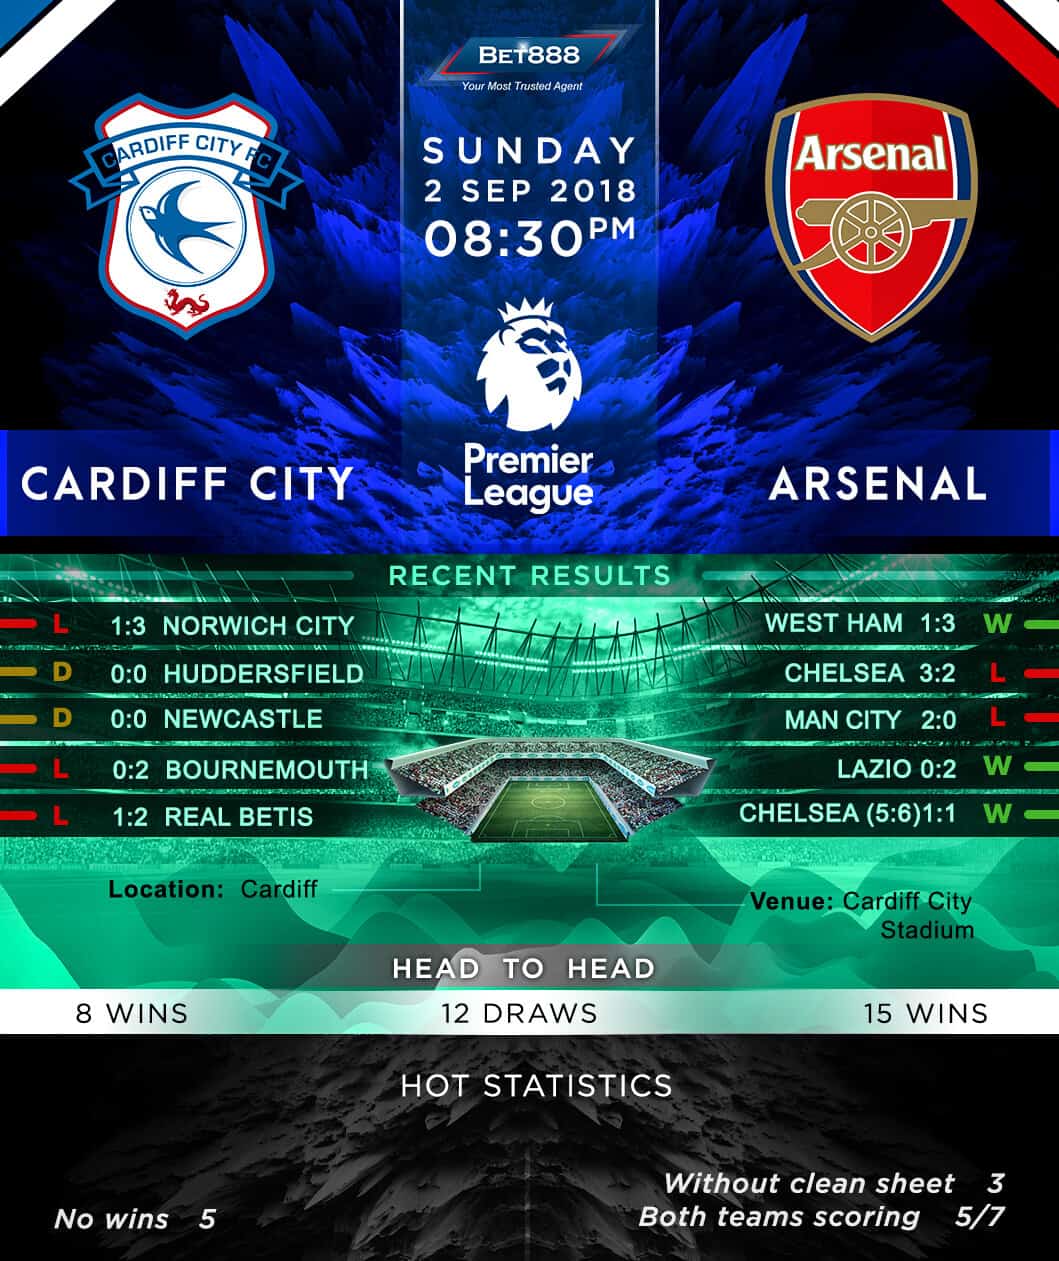 Cardiff City vs Arsenal 02/09/18